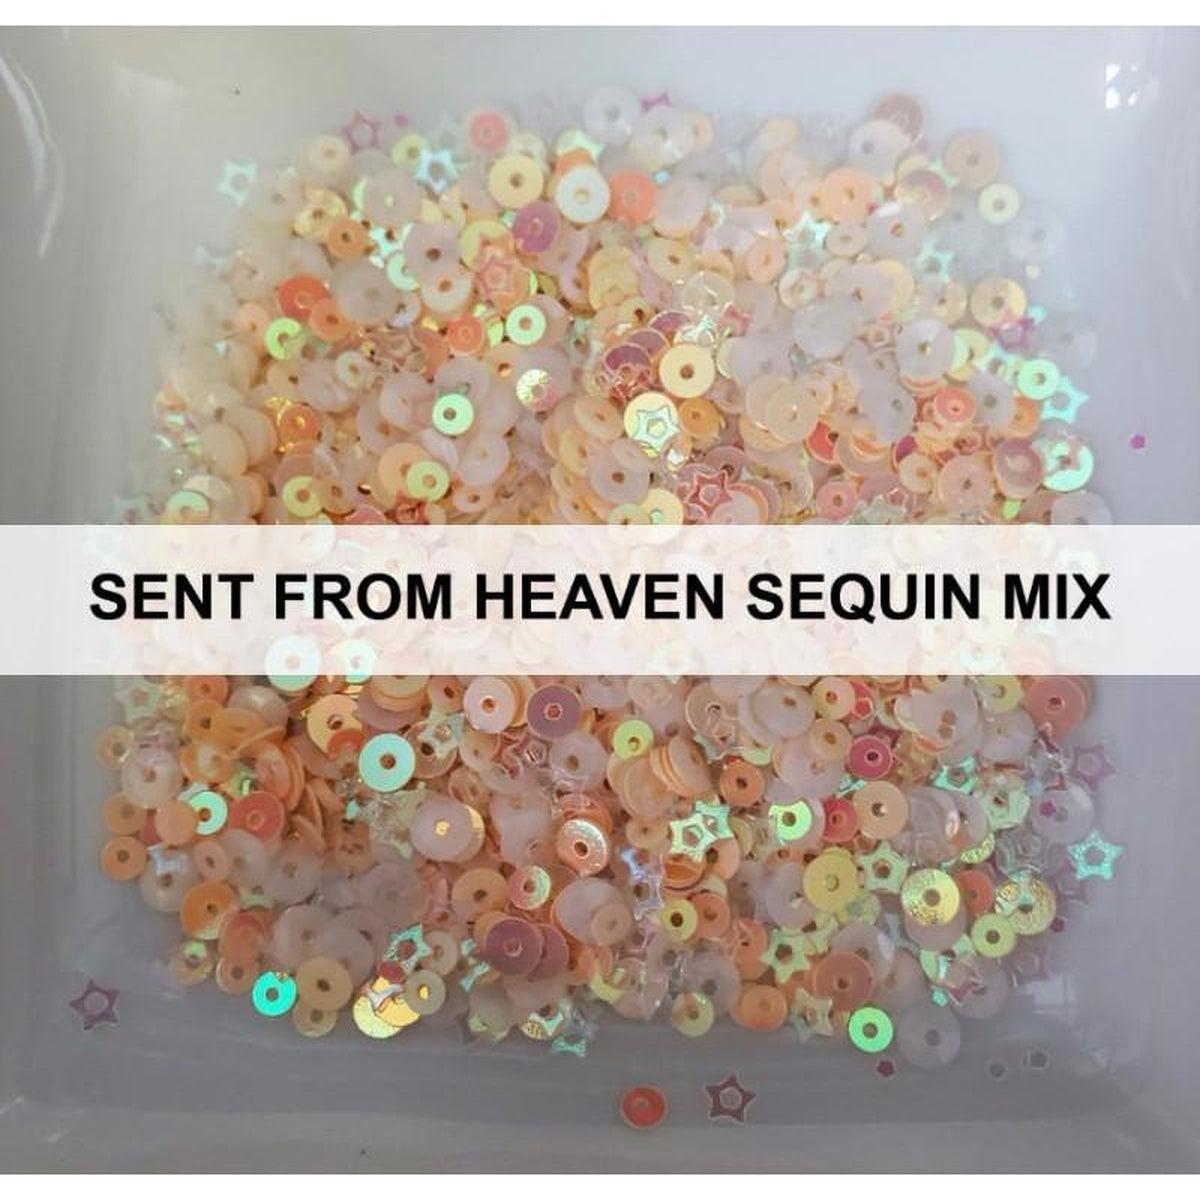 Sent from Heaven Sequin Mix